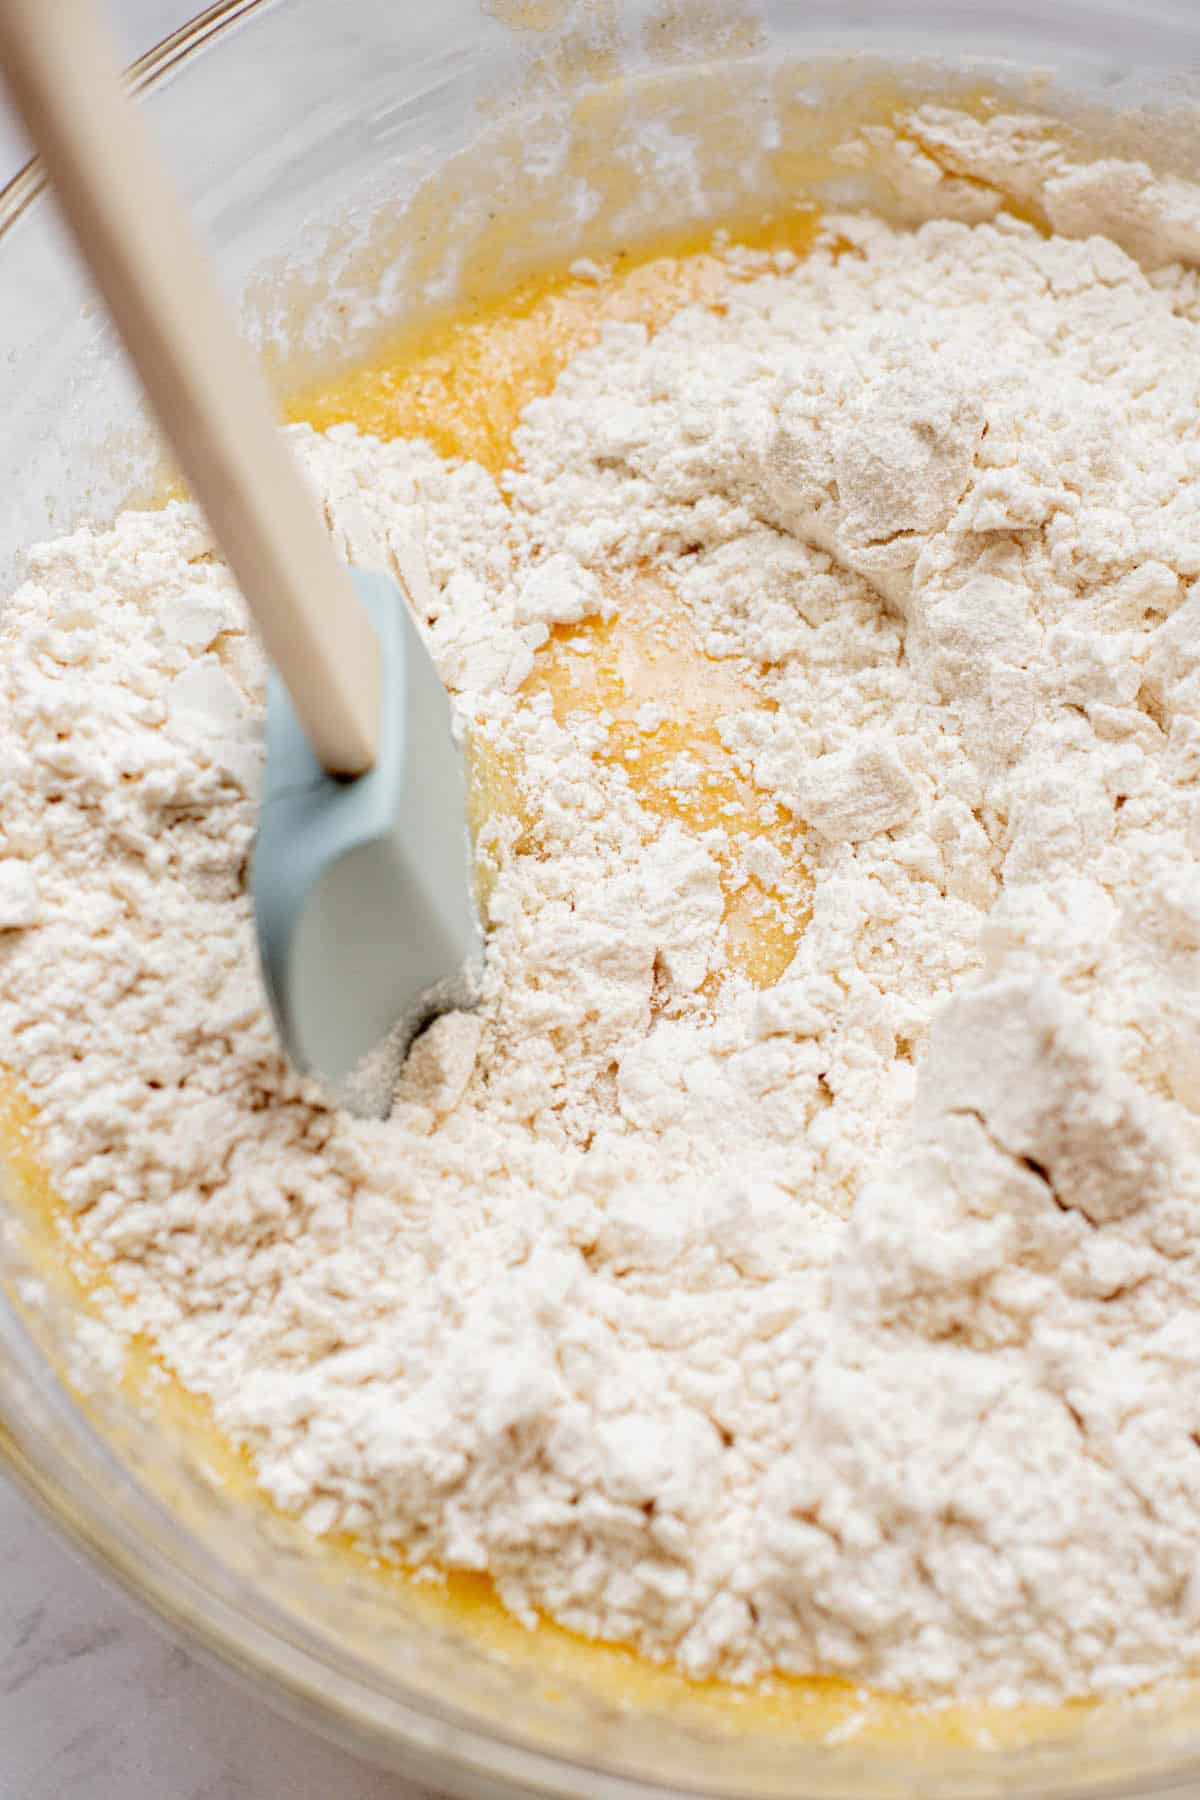 flour mixed into batter.